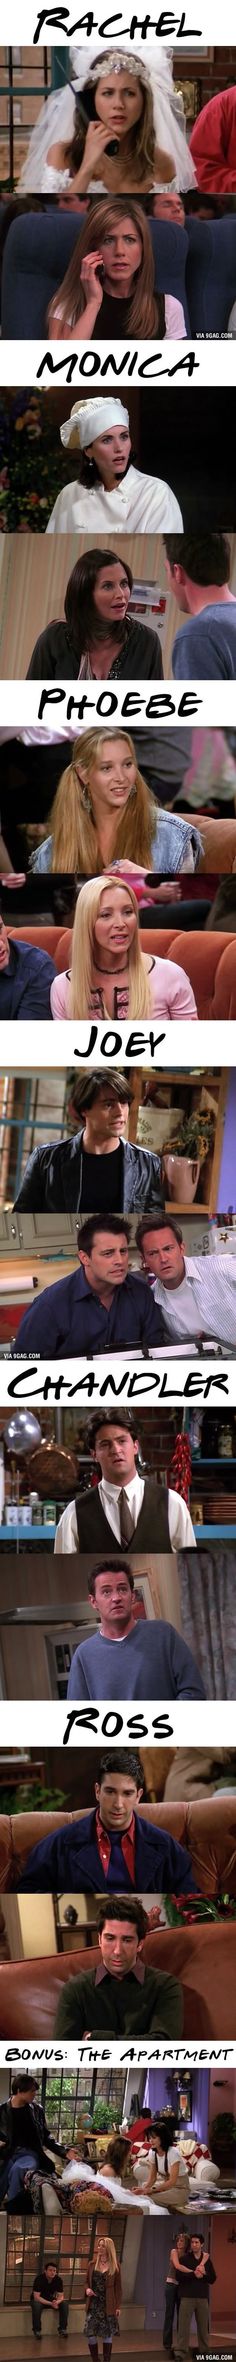 The Cast Of "Friends" On The First Episode (1994) Vs. The Last Episode (2004) Harry Potter, Humour, Fandom, Man, Fotos, Meme, Humor, Ross Geller